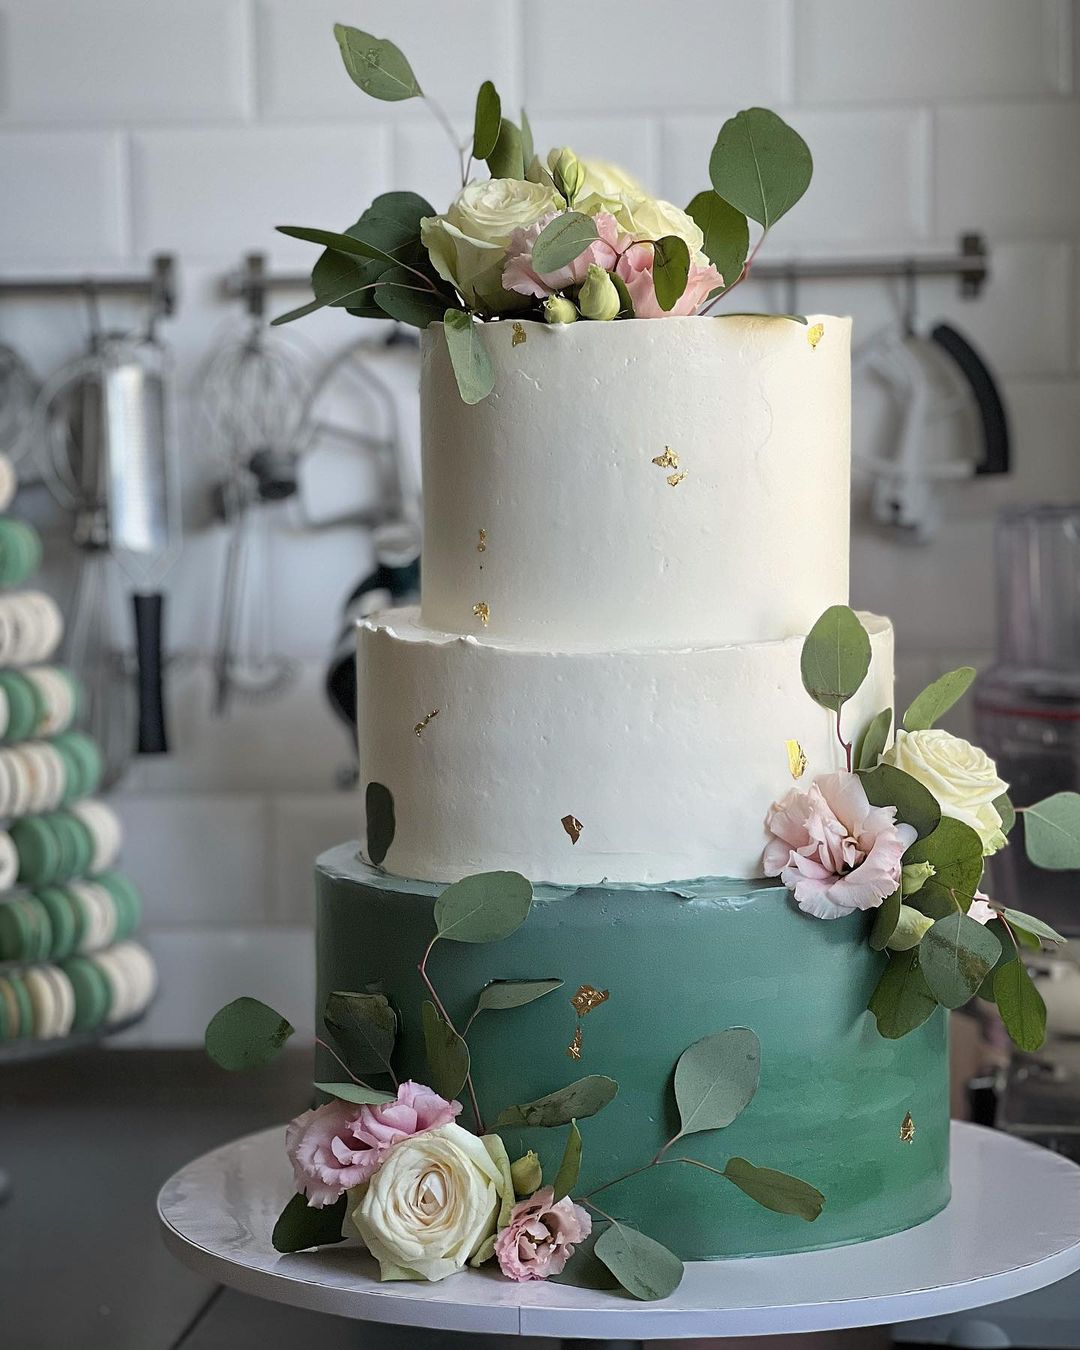 elegant 3 tier emerald modern wedding cake with pink roses via domcine_laskonky